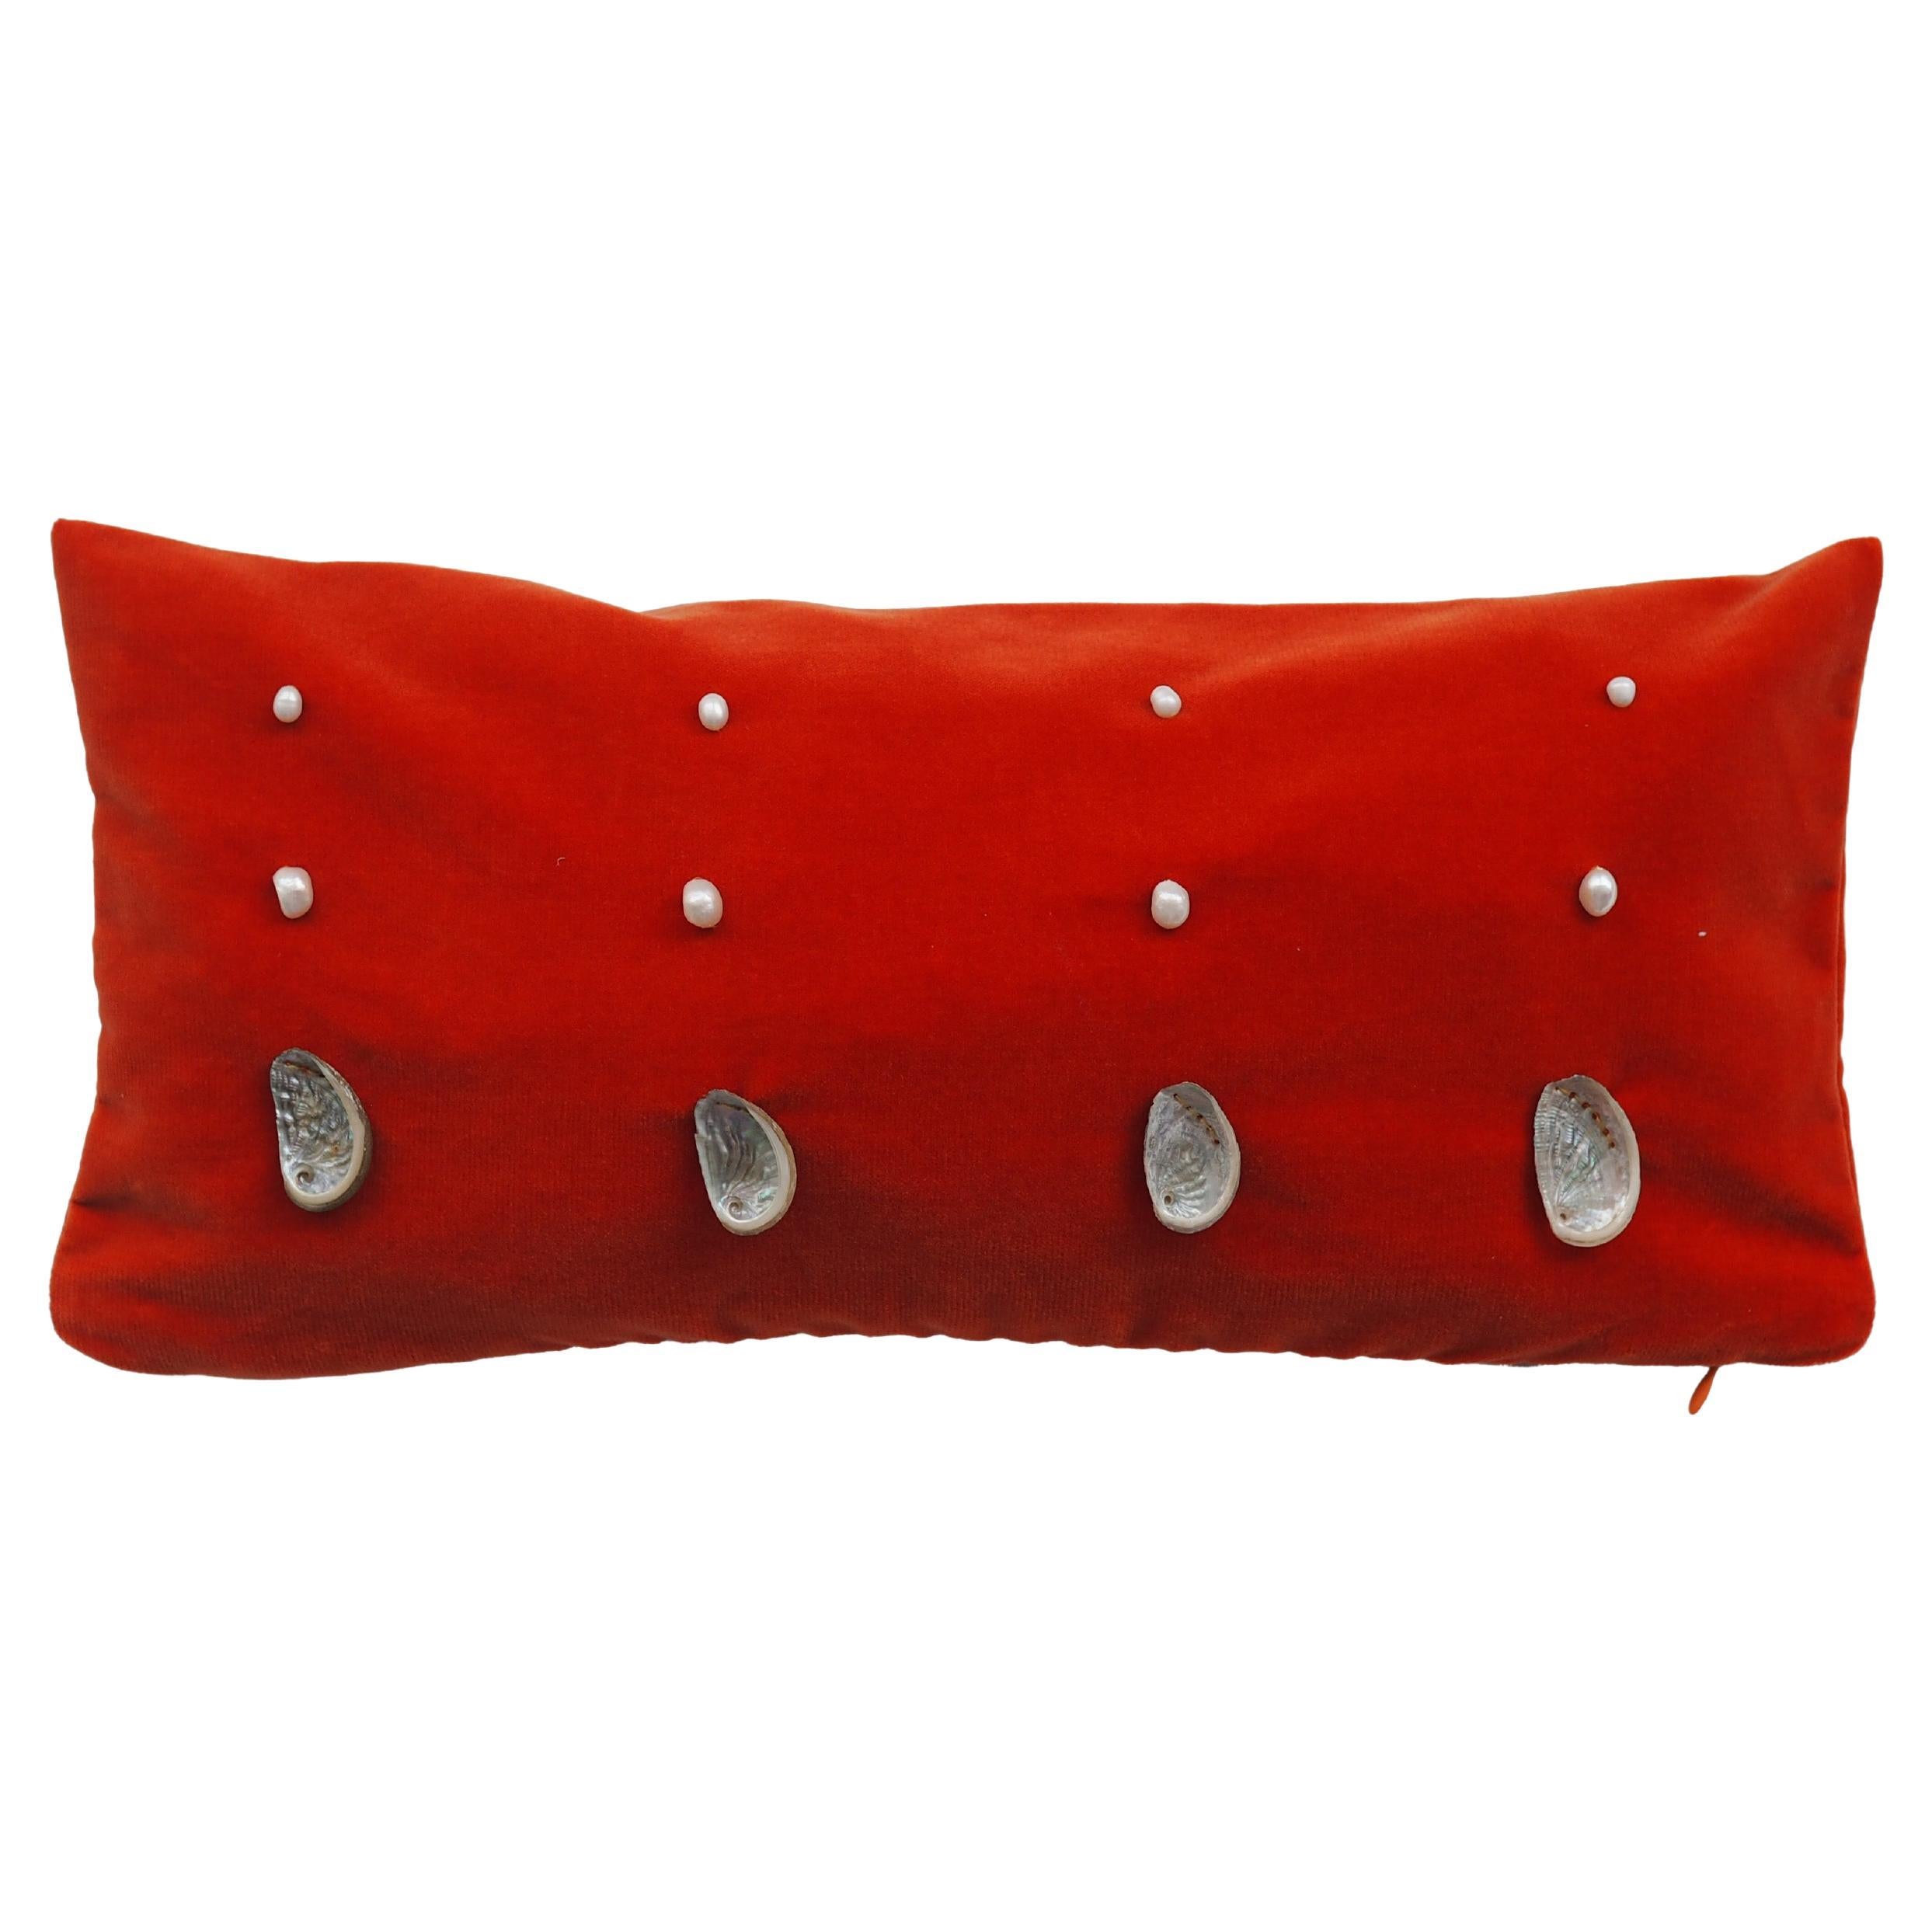 Bon Appetit 014 Decorative Cushion Culto Ponsoda 21st century desingn For Sale